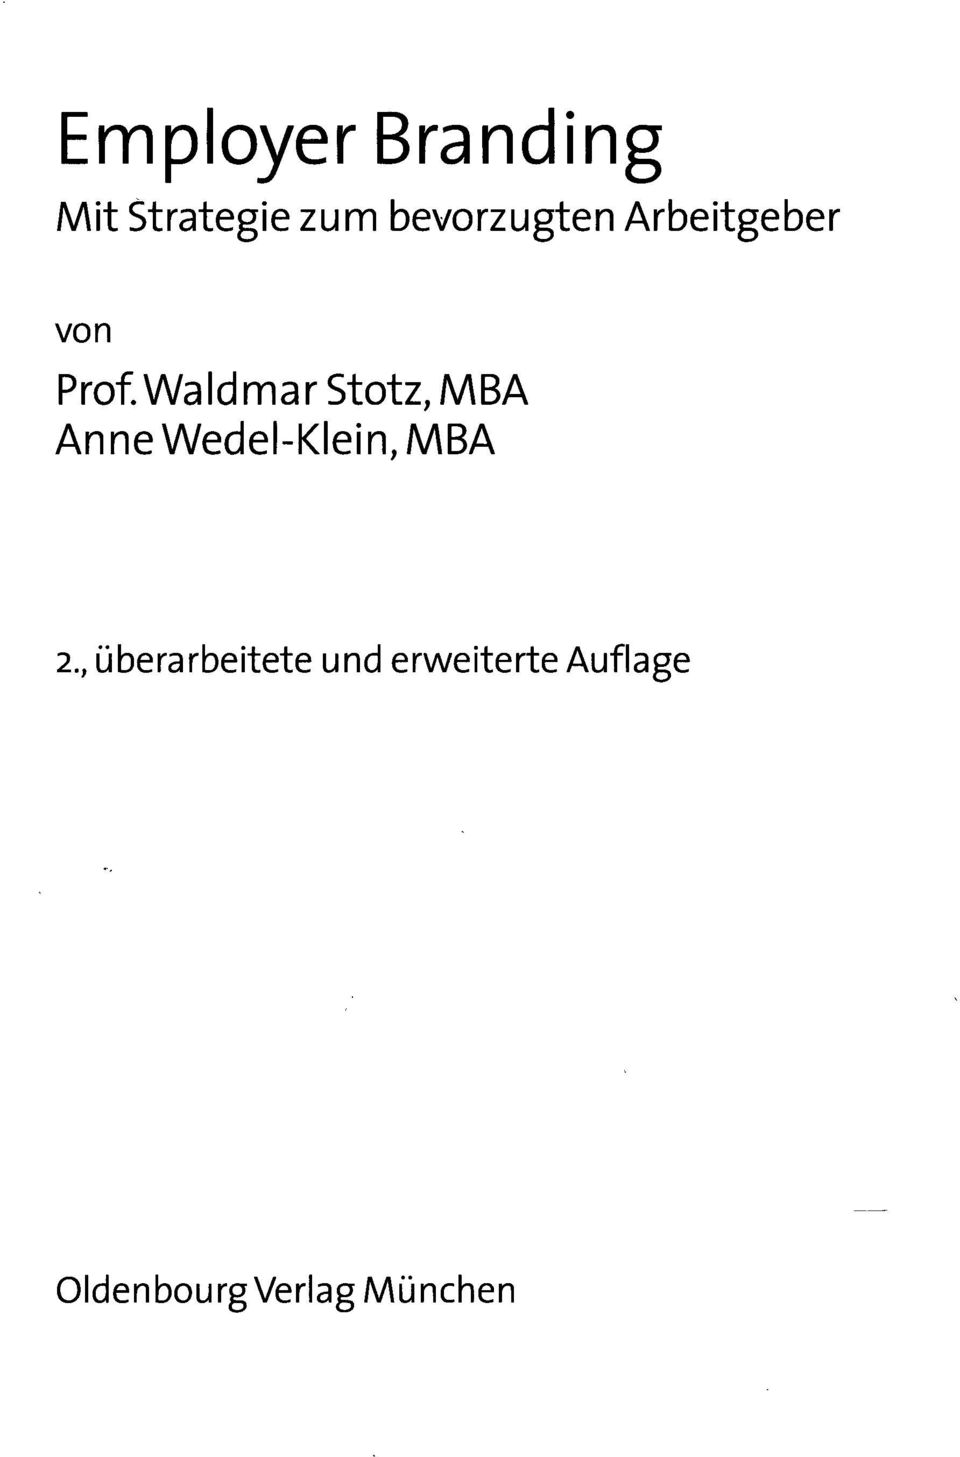 WaldmarStotz,MBA Anne Wedel-Klein, MBA 2.